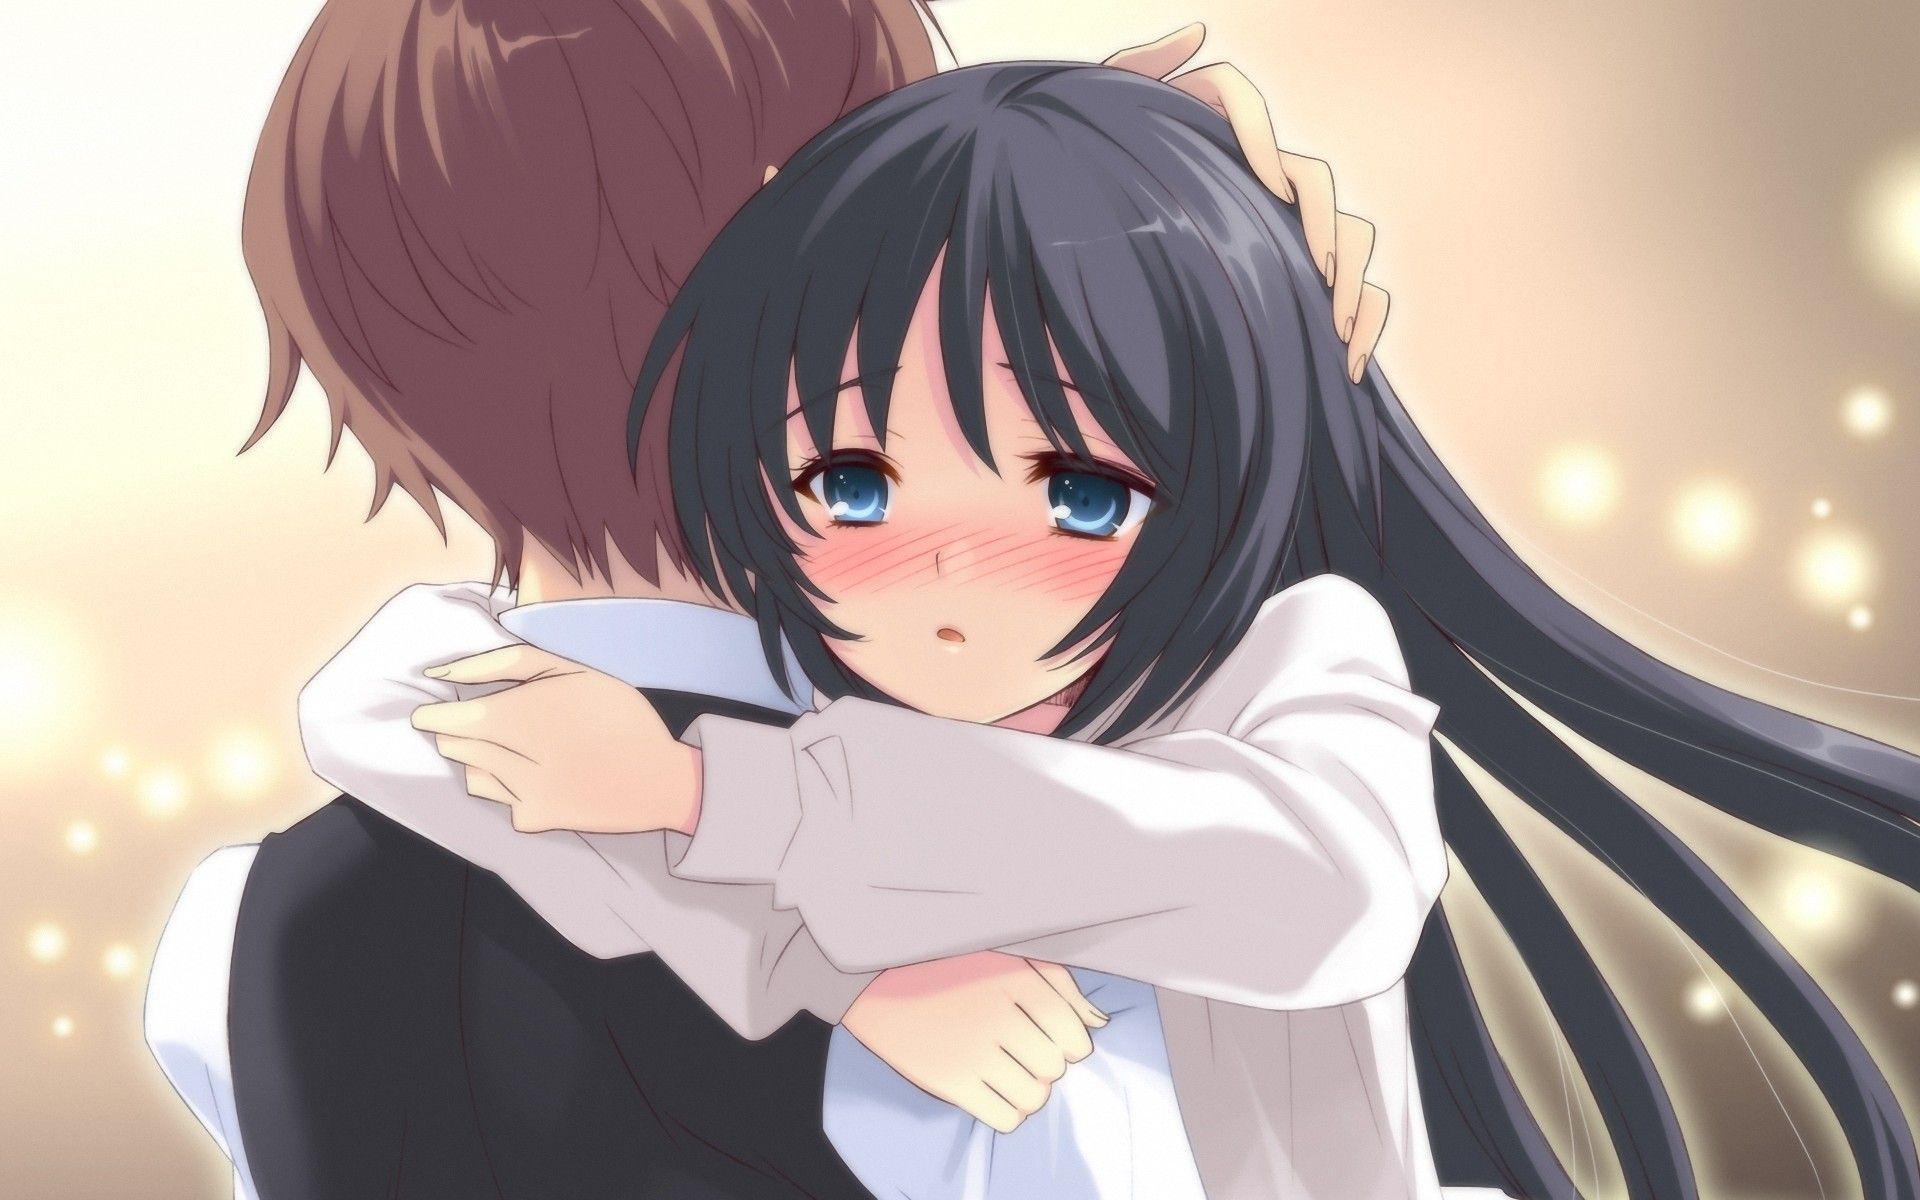 Anime Hug From Behind